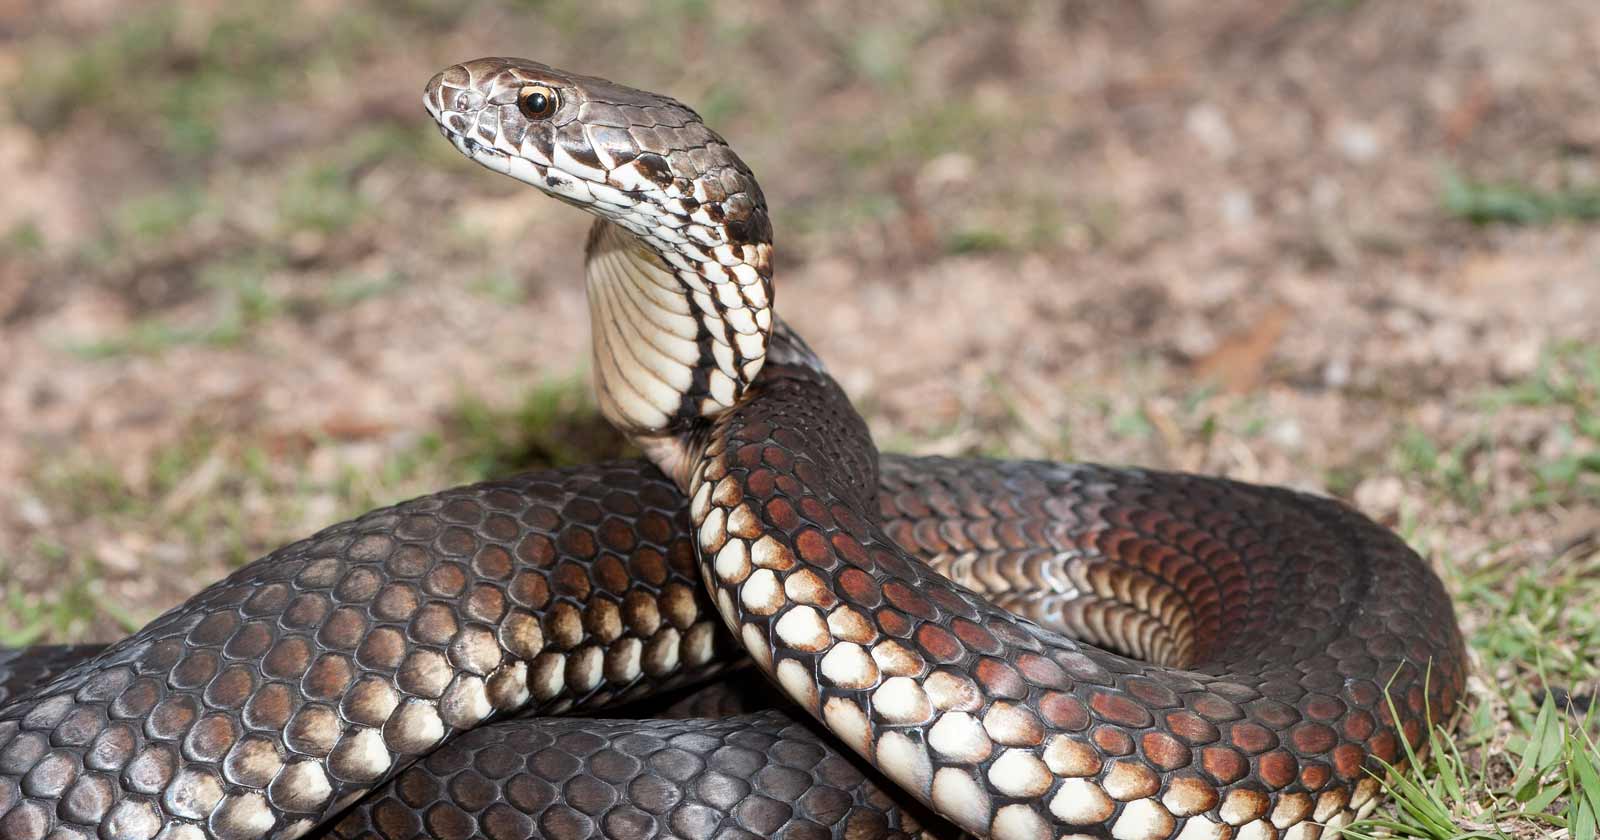 Australian Highlands Copperhead snake in strike position